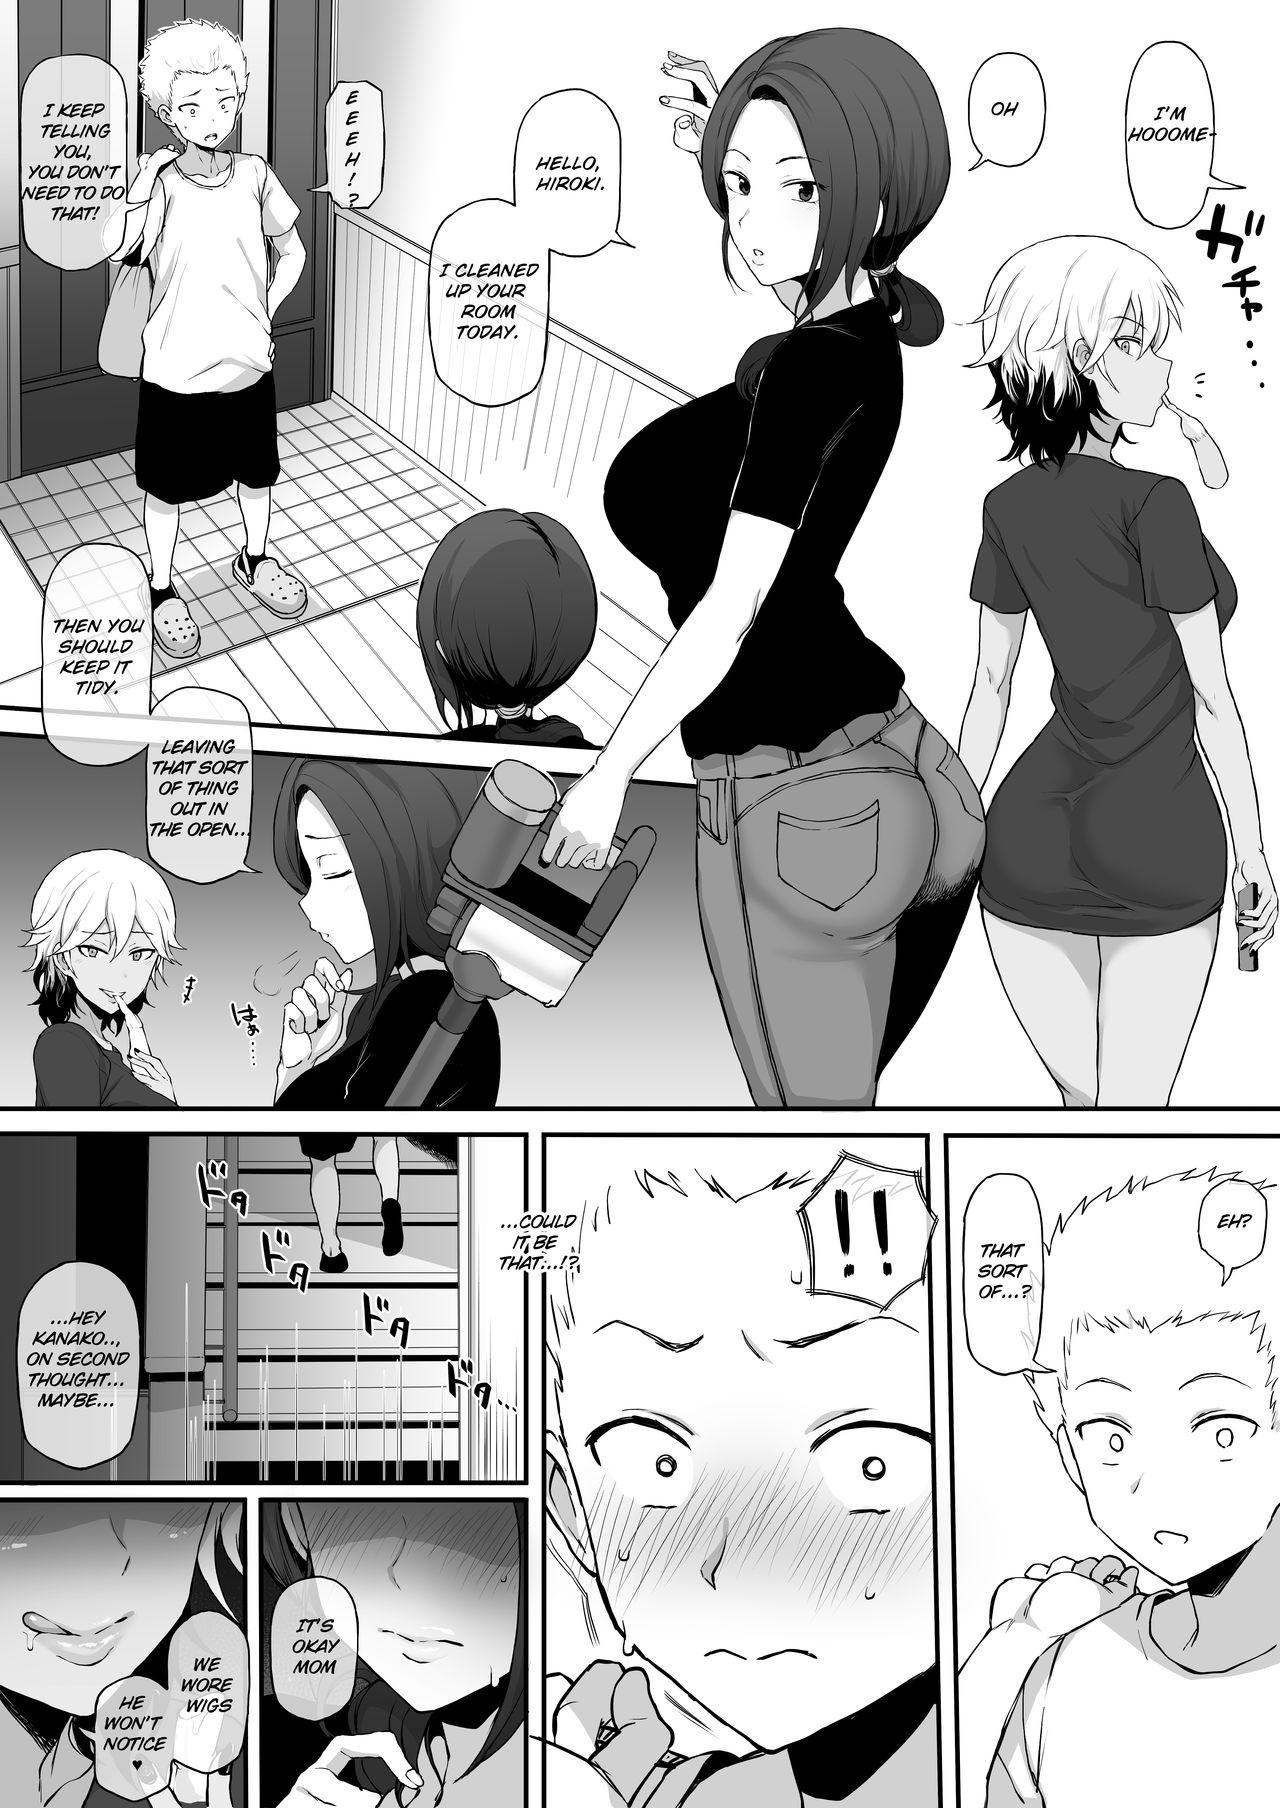 Kokujin no Tenkousei NTR ru Chapters 1-6 part 1 Plus Bonus chapter: Stolen Mother’s Breasts 27